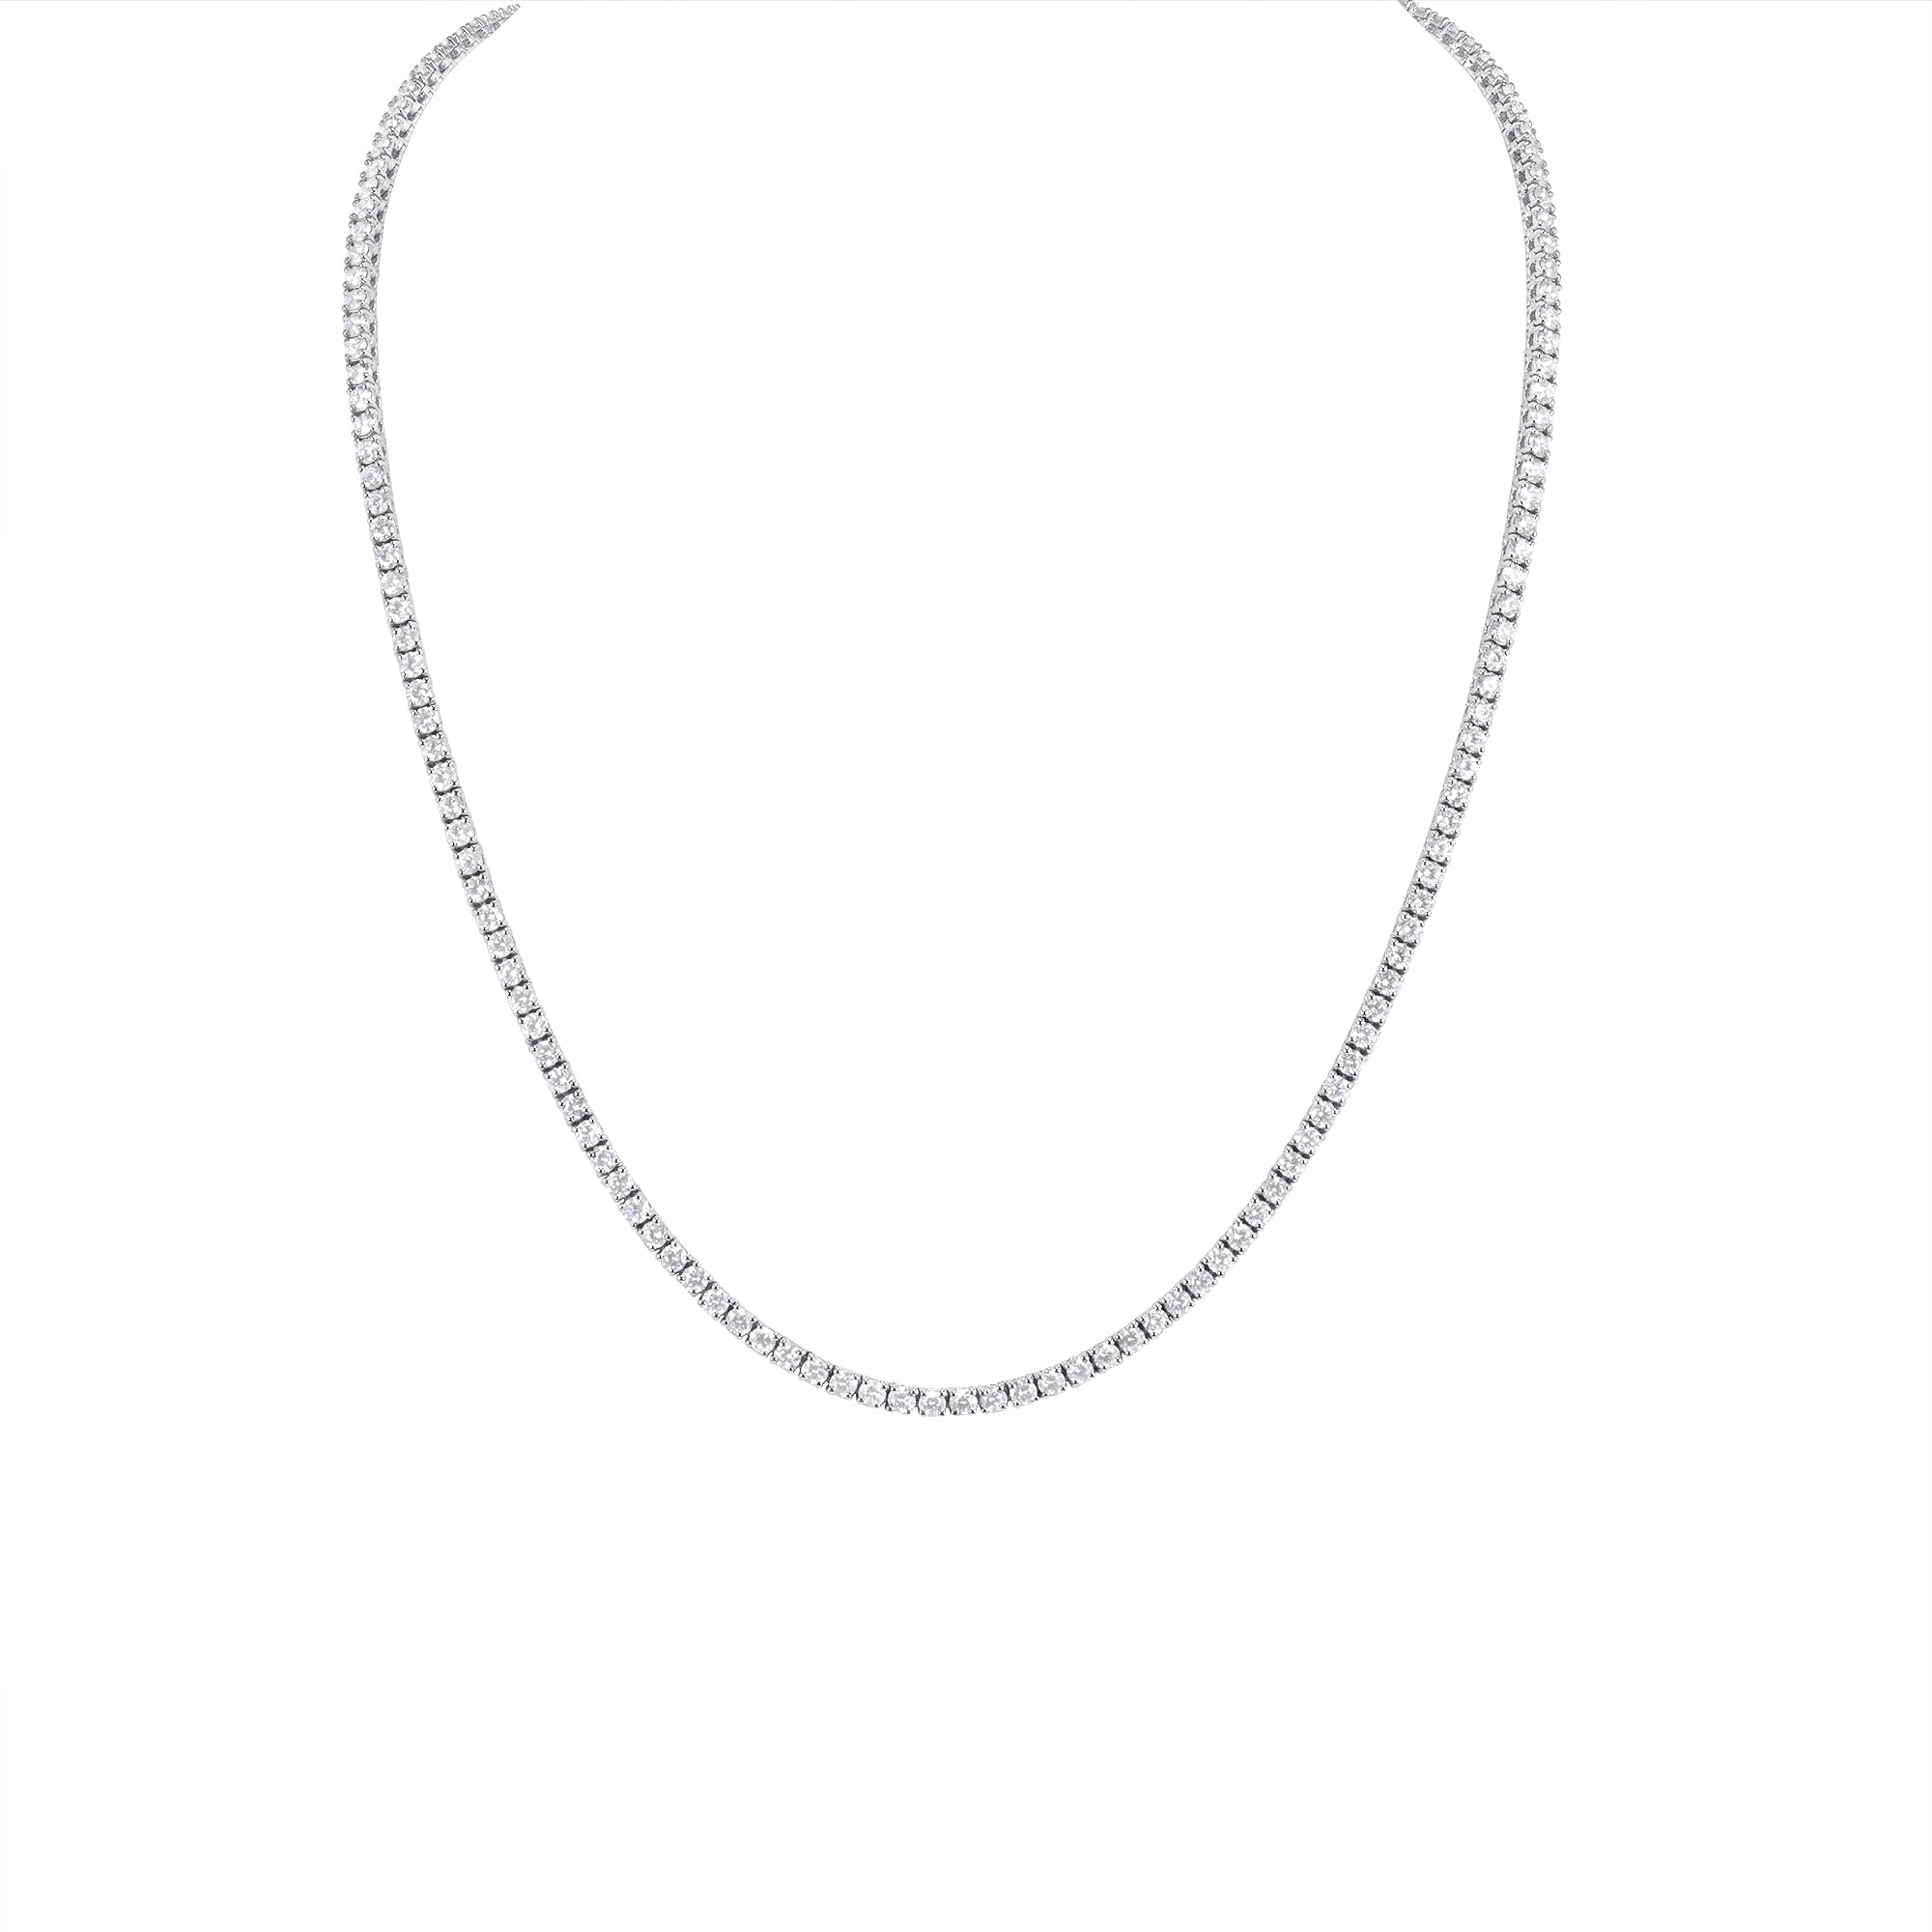 18.11ct Straight Line Round Brilliant Diamond Tennis Necklace in 18K White Gold